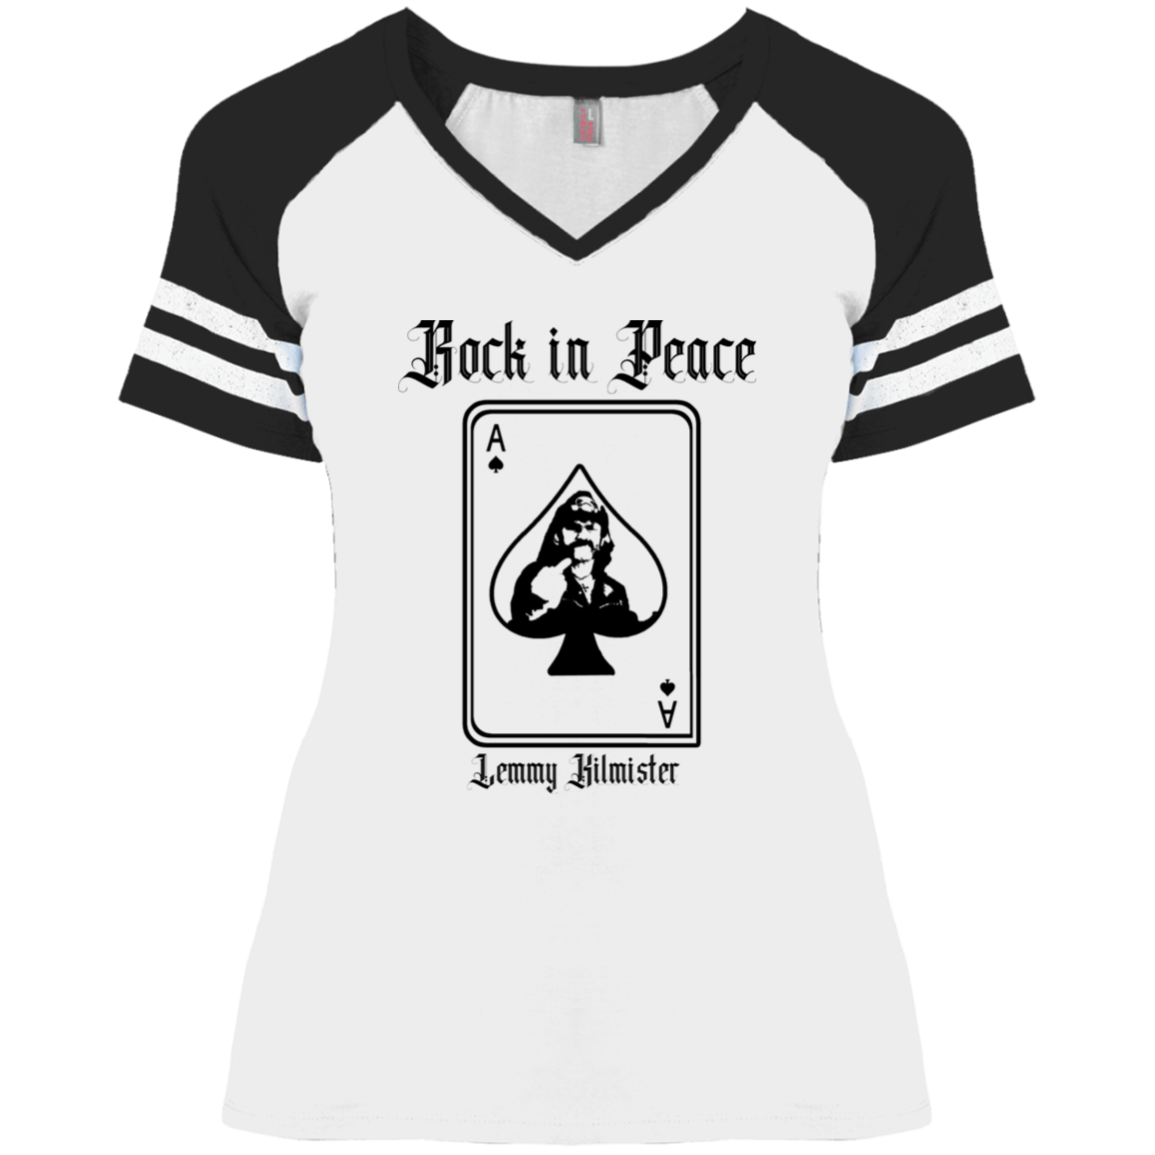 ArtichokeUSA Custom Design. Lemmy Kilmister "Ace of Spades" Tribute Fan Art Version 2 of 2. Ladies' Game V-Neck T-Shirt